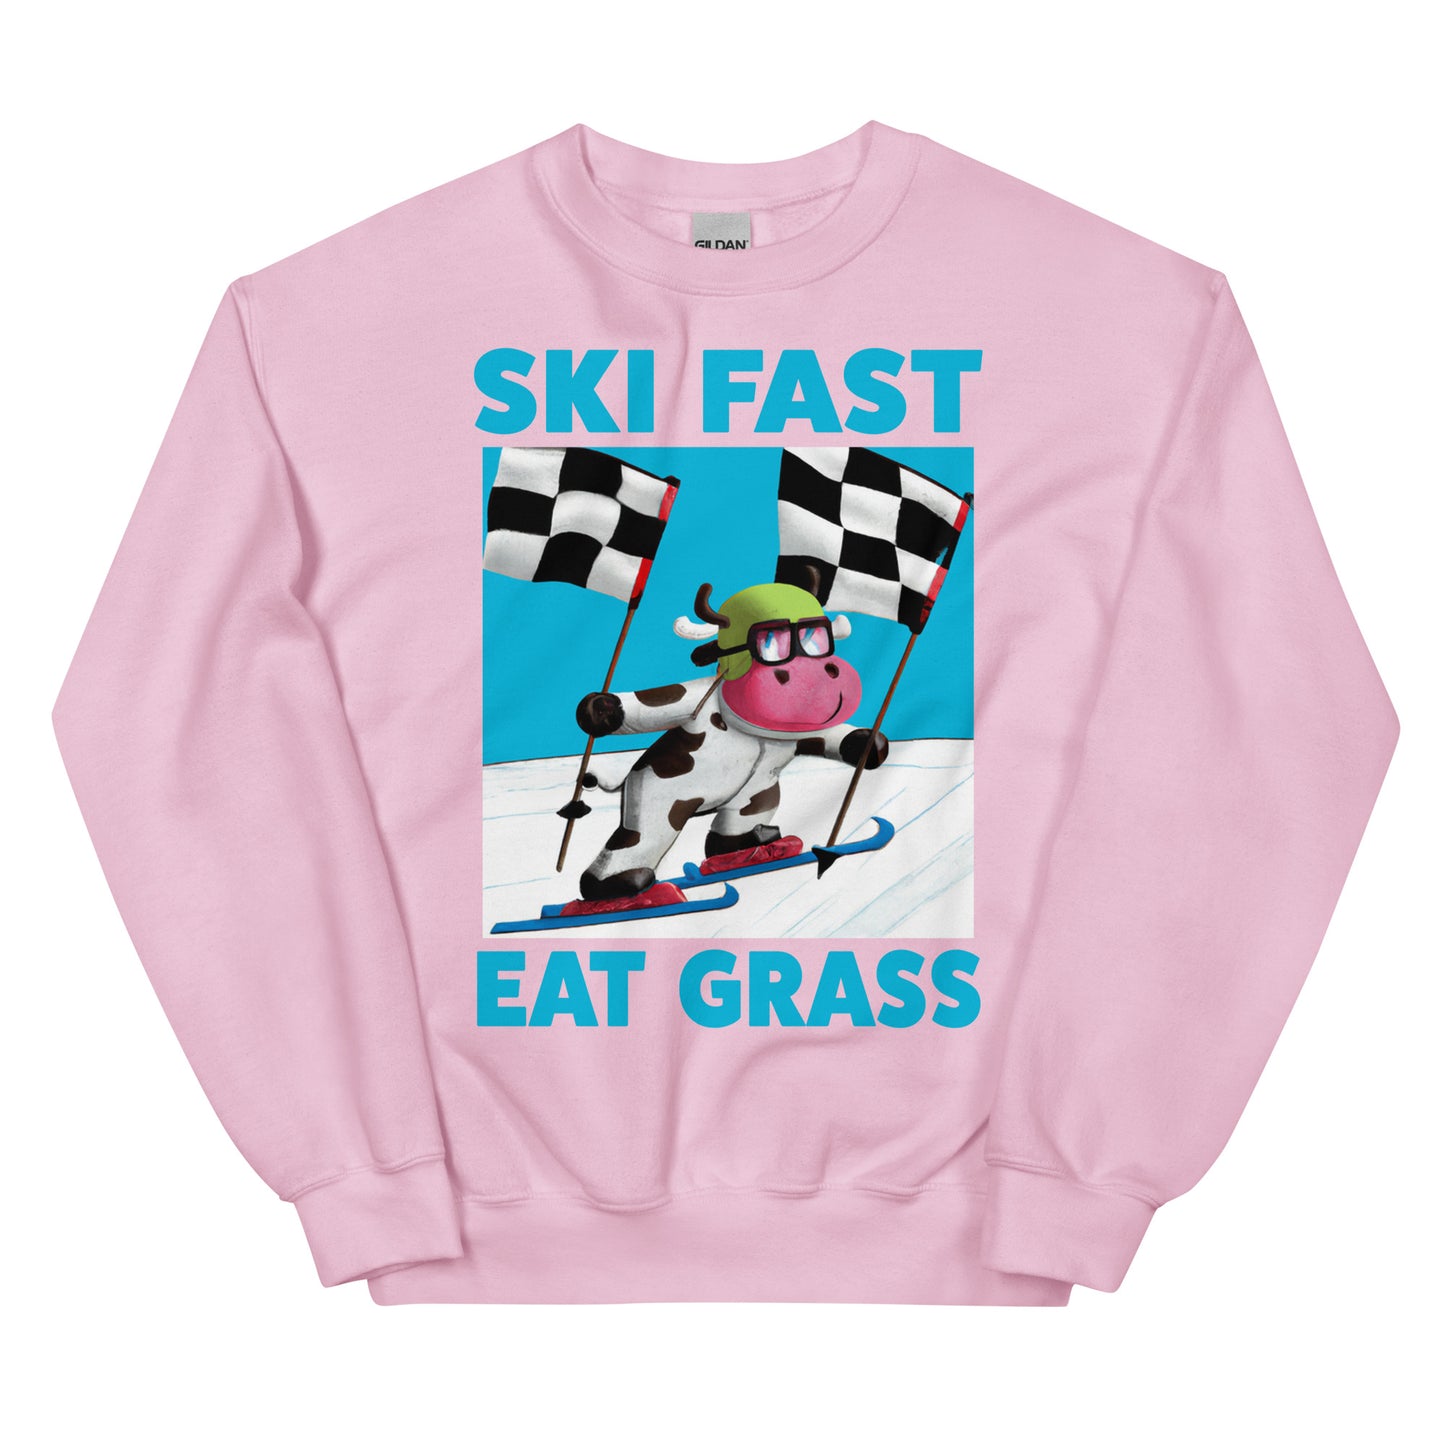 Ski fast eat grass cow skiing screen printed crewneck sweatshirt